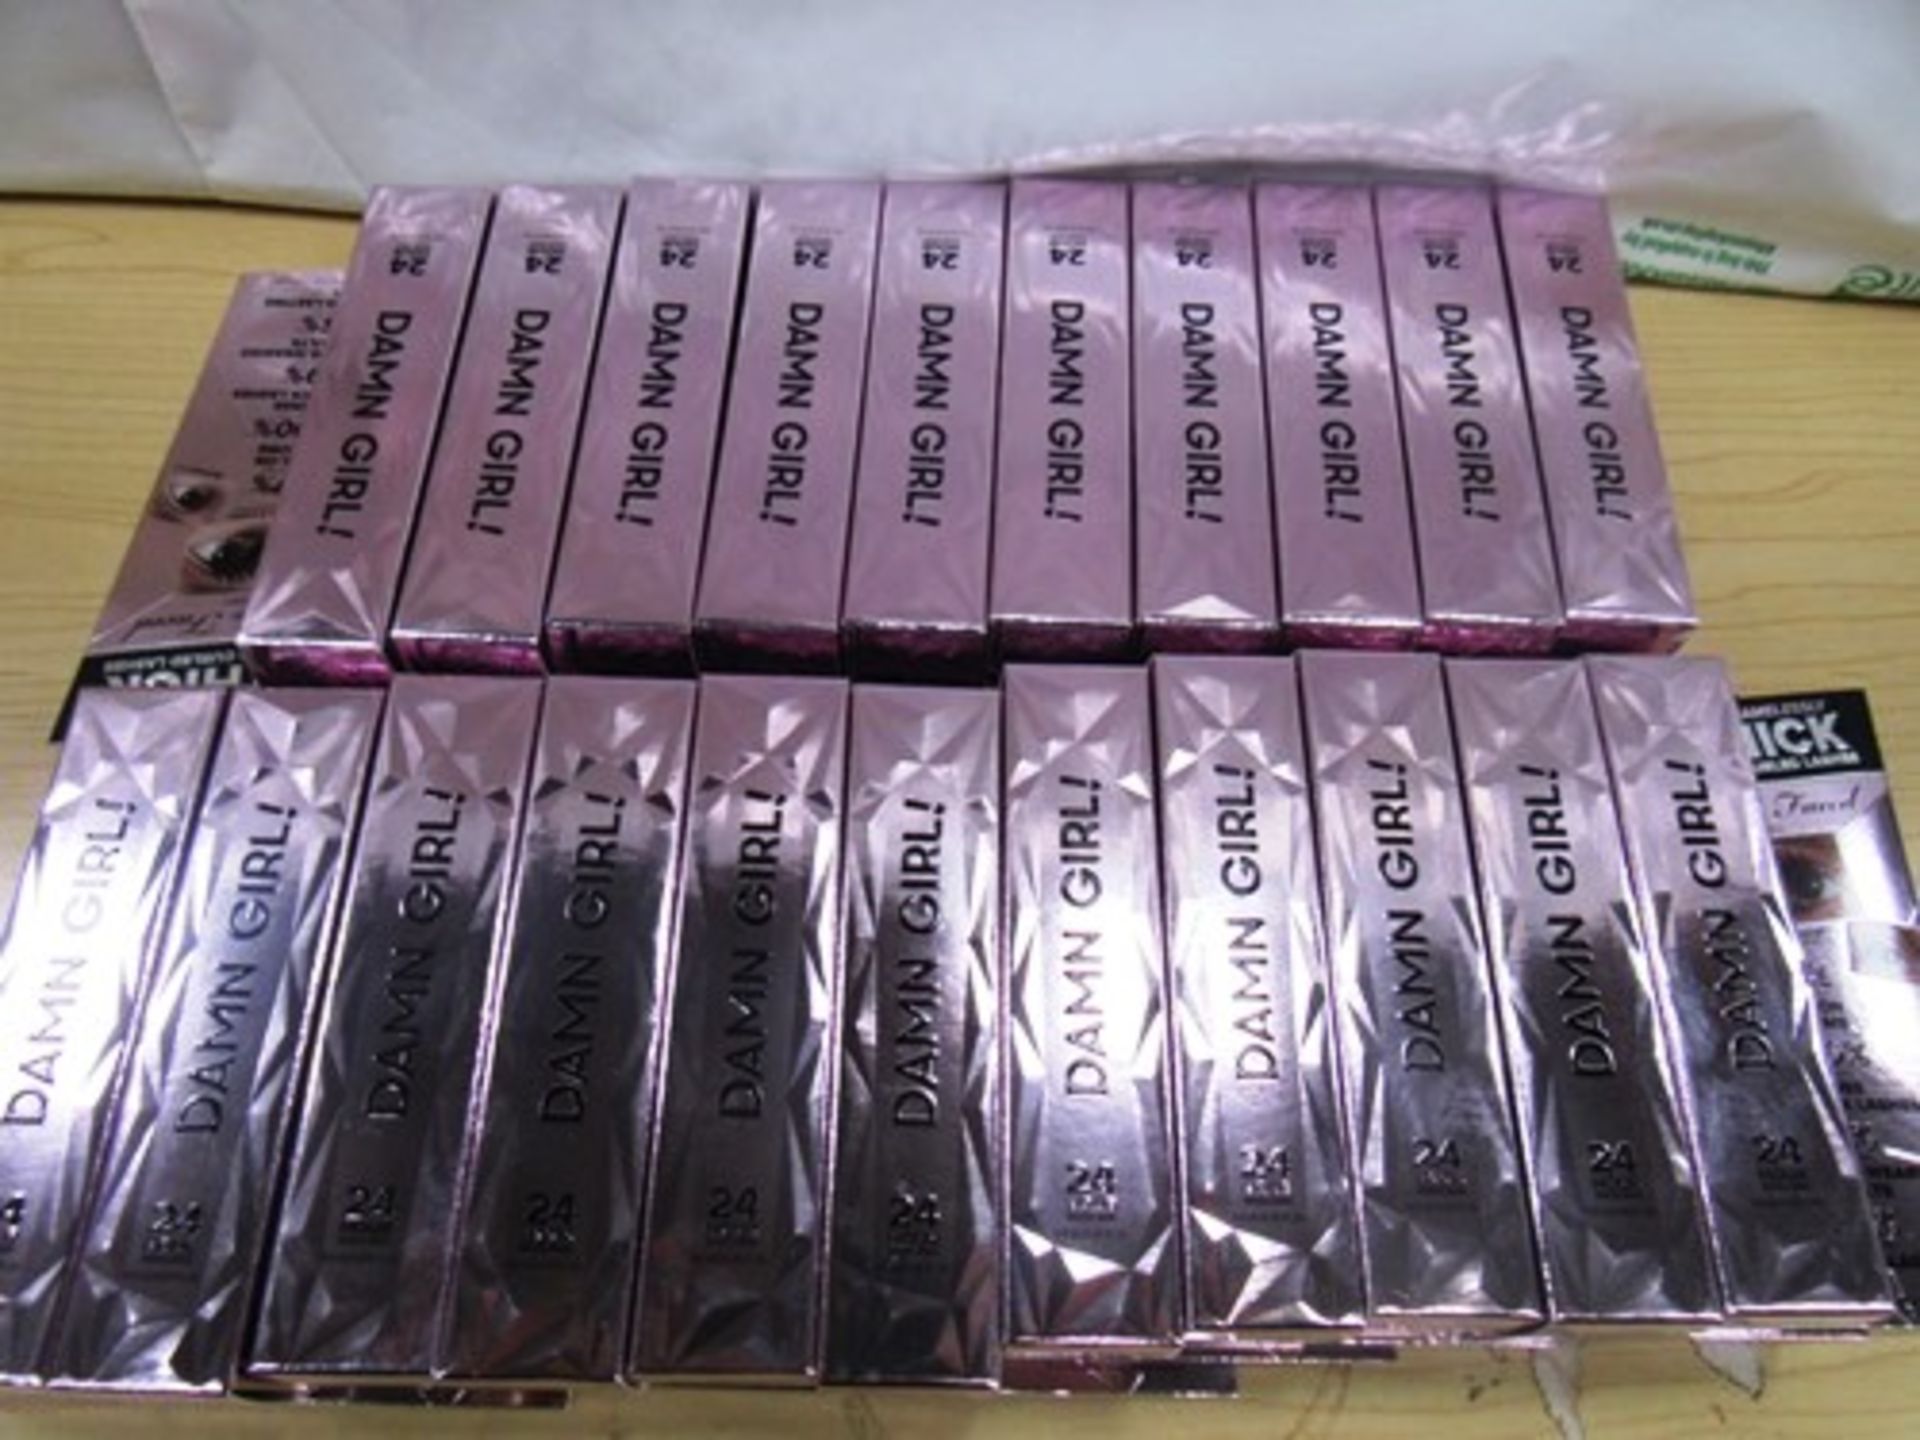 25 x 6.0ml Too Faced handbag size mascaras - Sealed new in box (C14E)